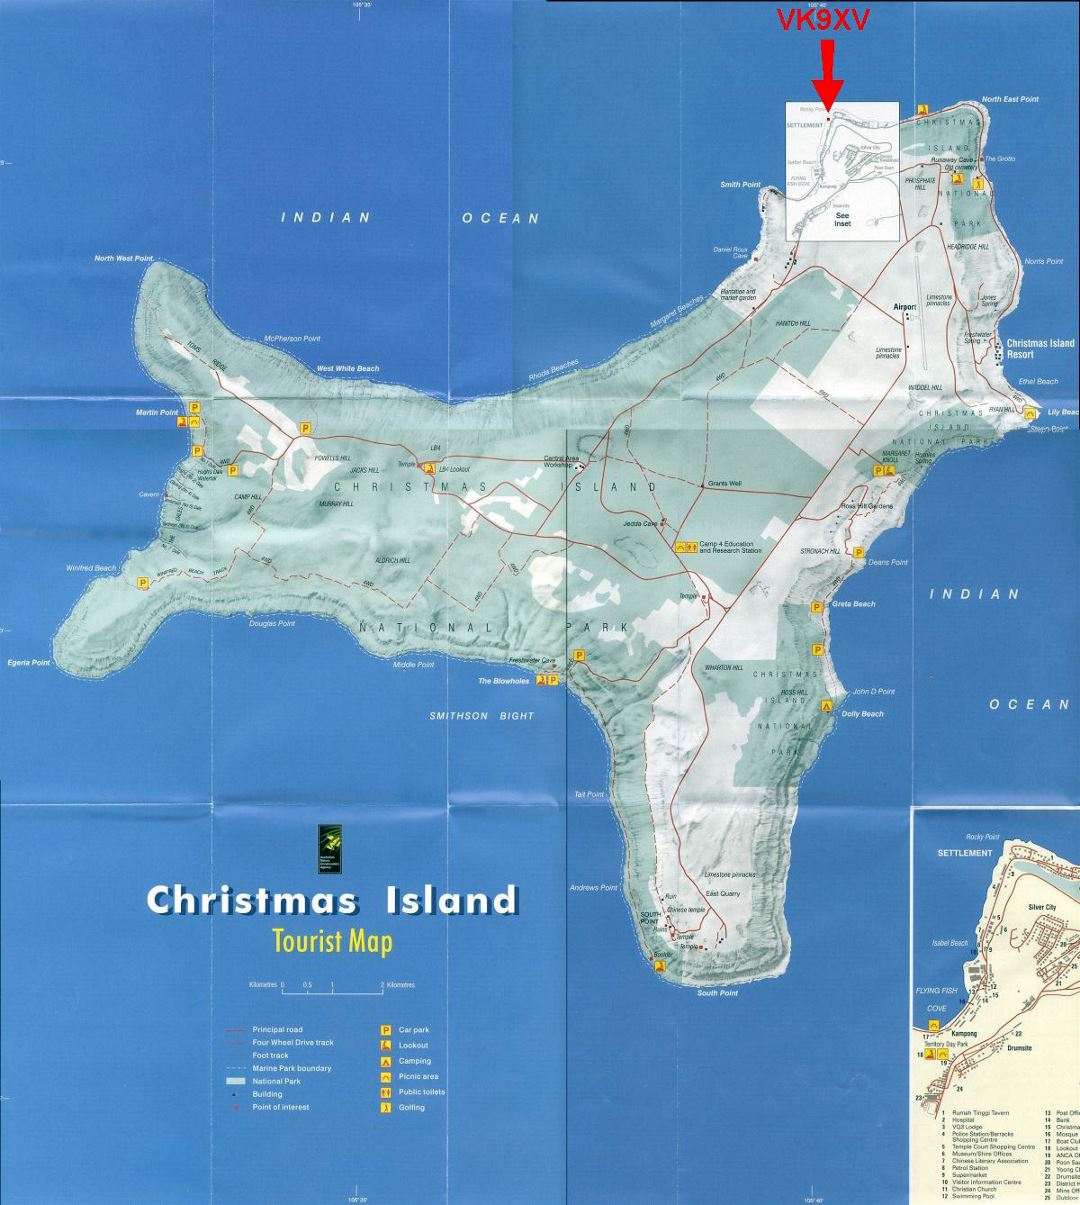 Large tourist map of Christmas Island